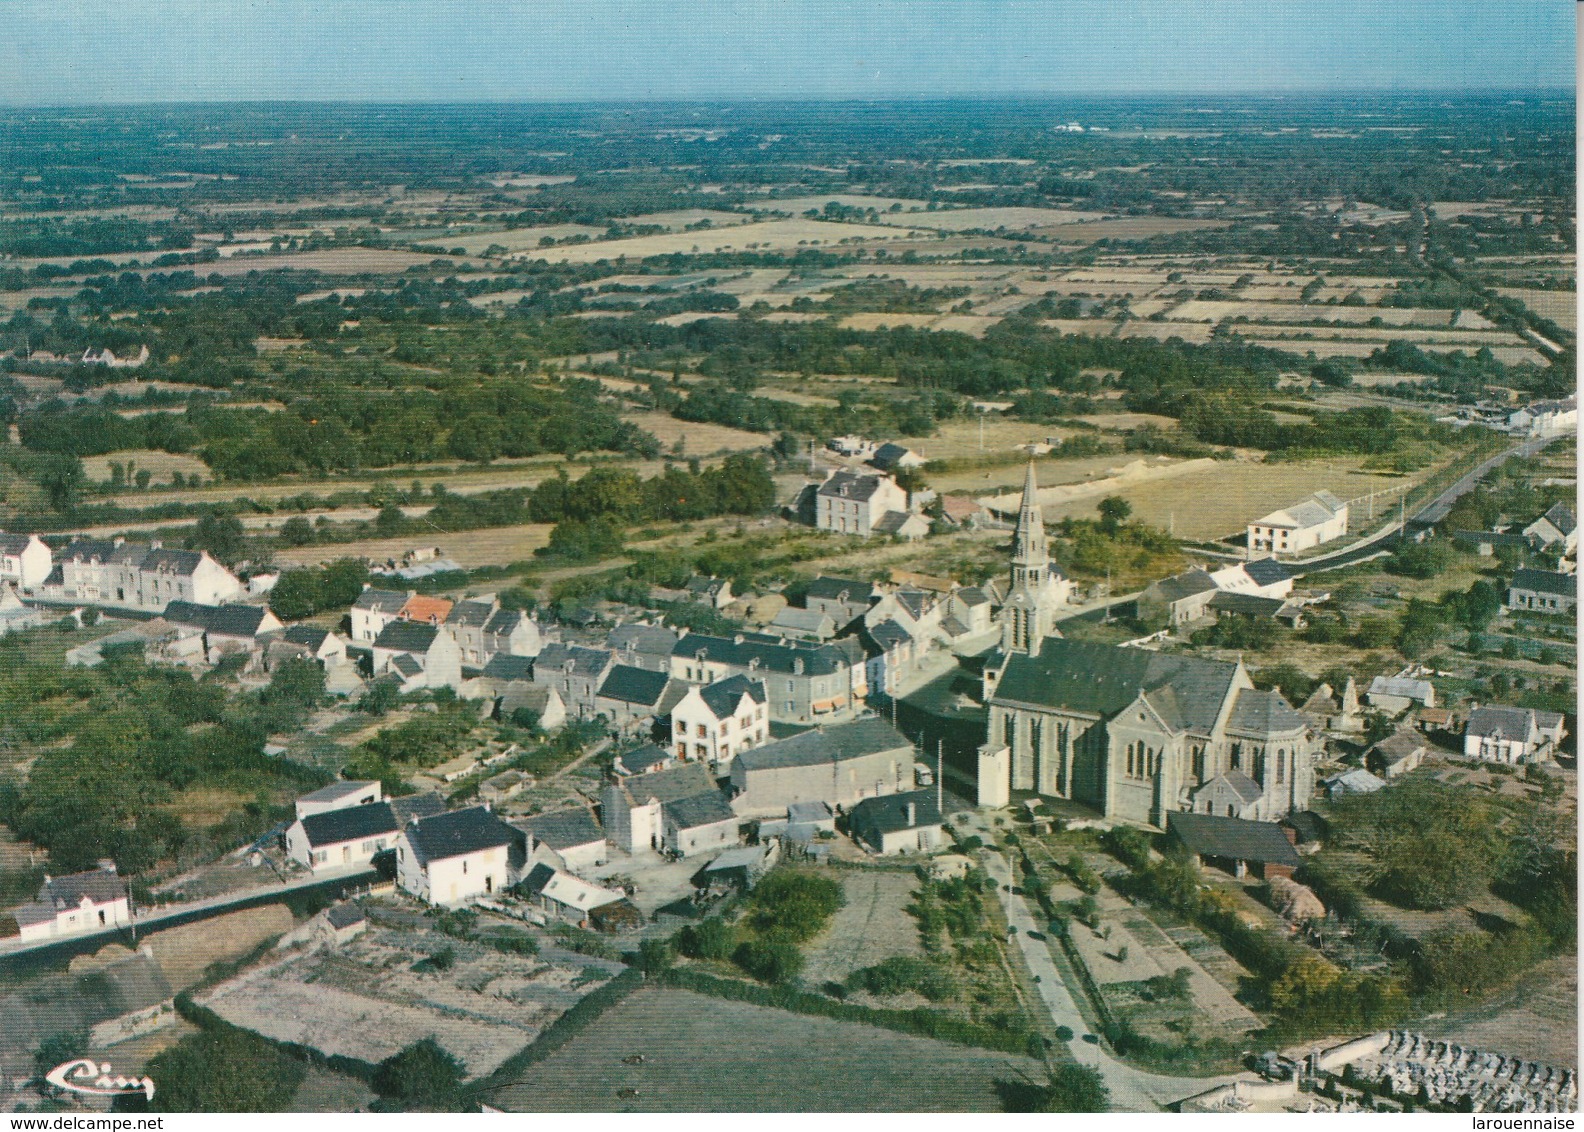 44 - SAINT LYPHARD - Vue Générale Aérienne - Saint-Lyphard